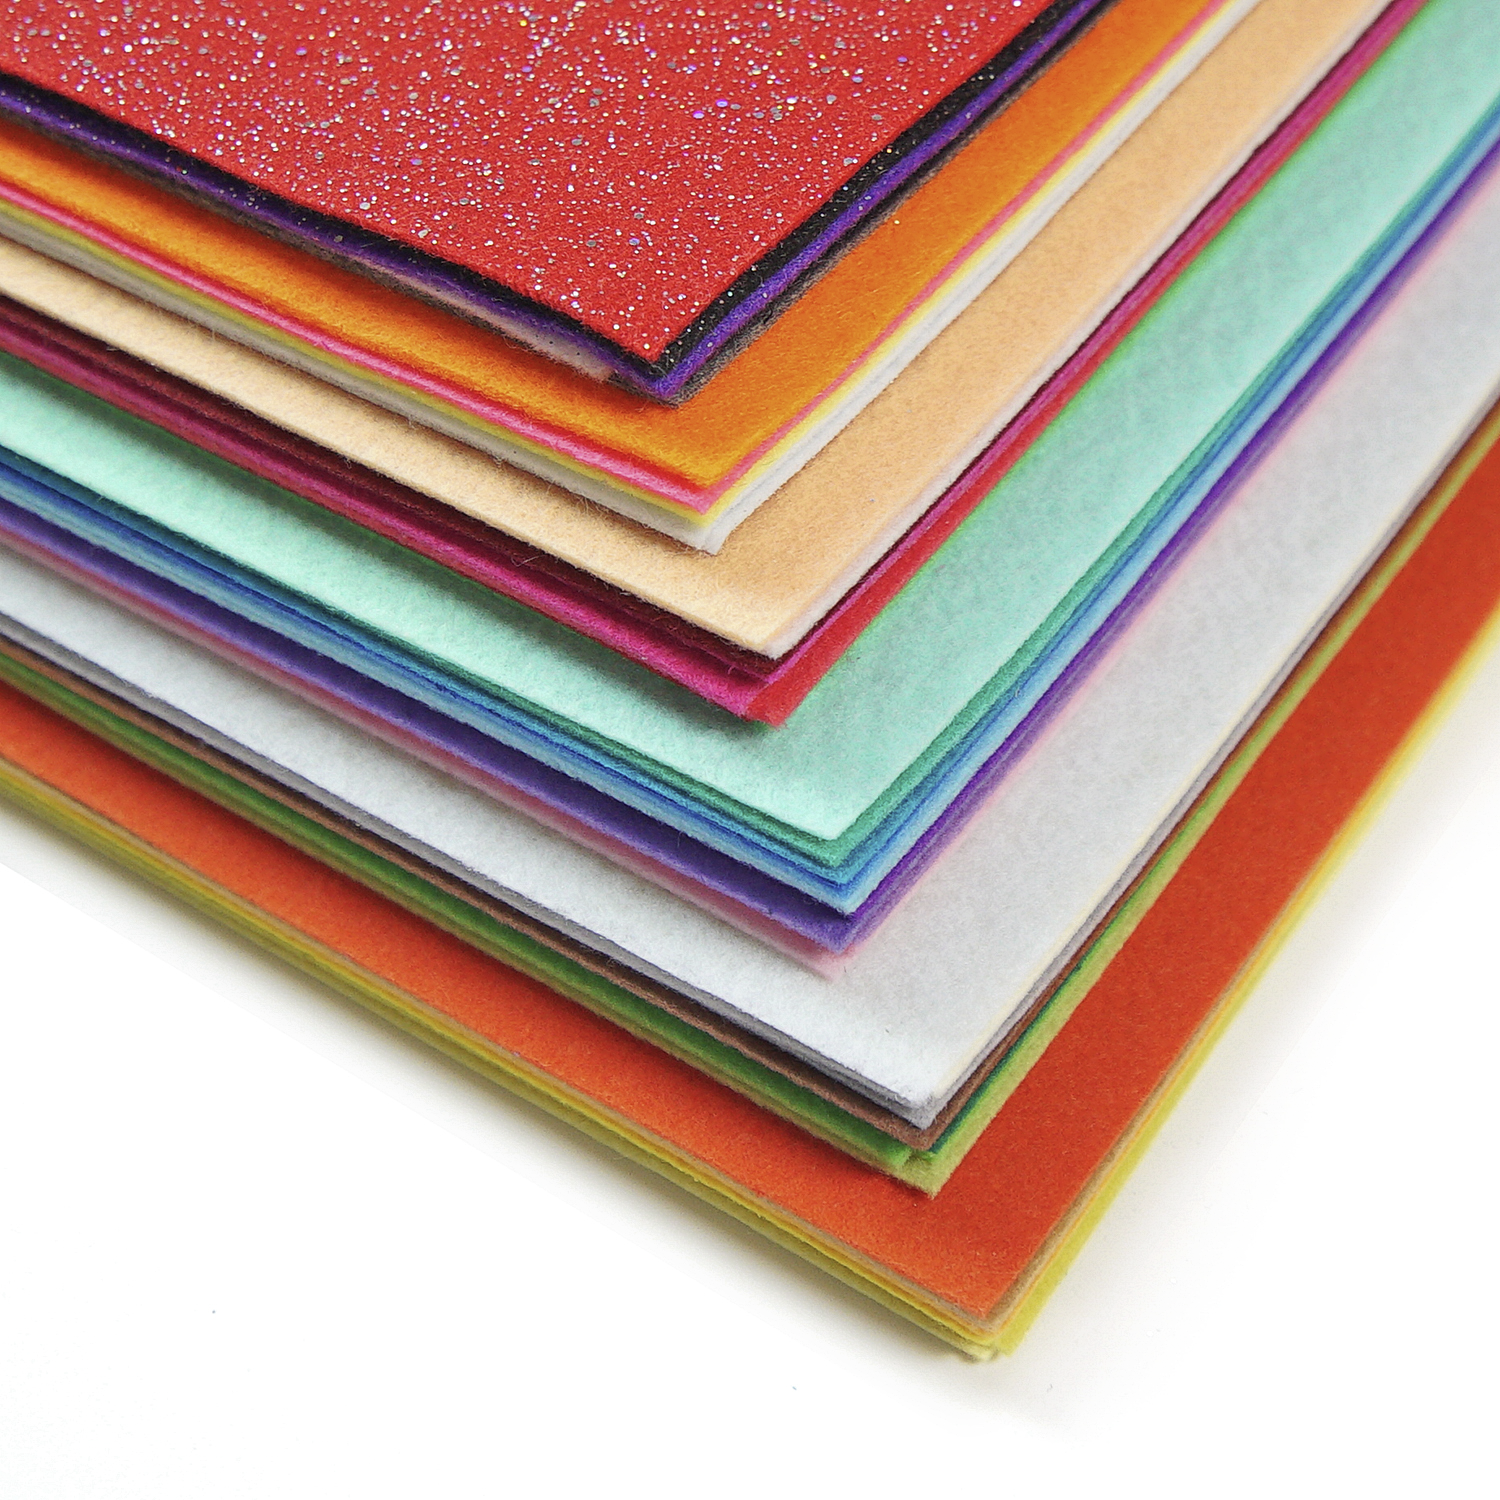 Arteza Adhesive Felt Fabric Sheets, Assorted Colors, 8.3x11.8 - Set Of 30  : Target